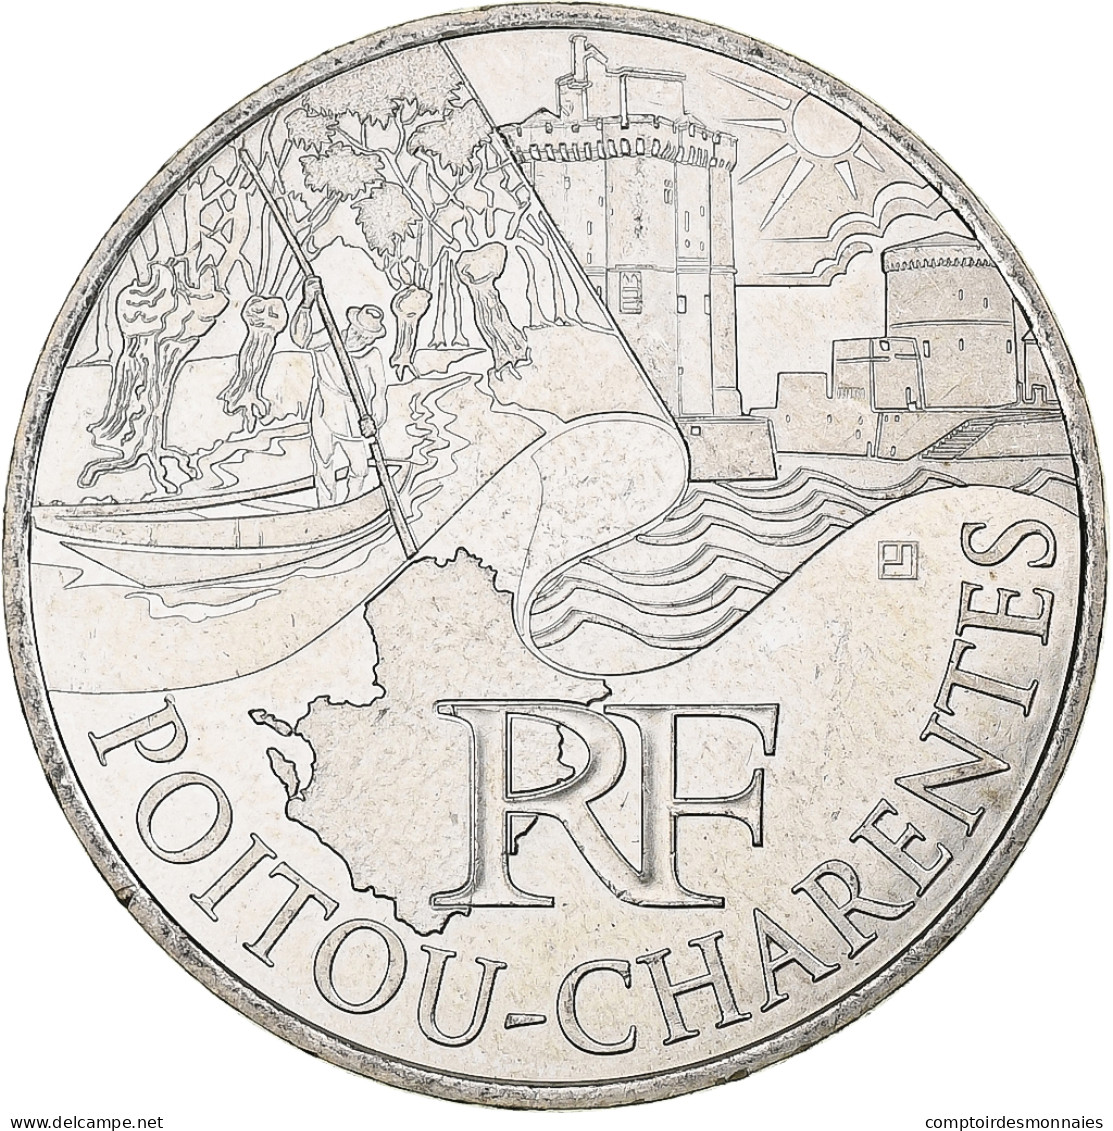 France, 10 Euro, Poitou-Charentes, 2011, MDP, Argent, SPL - France